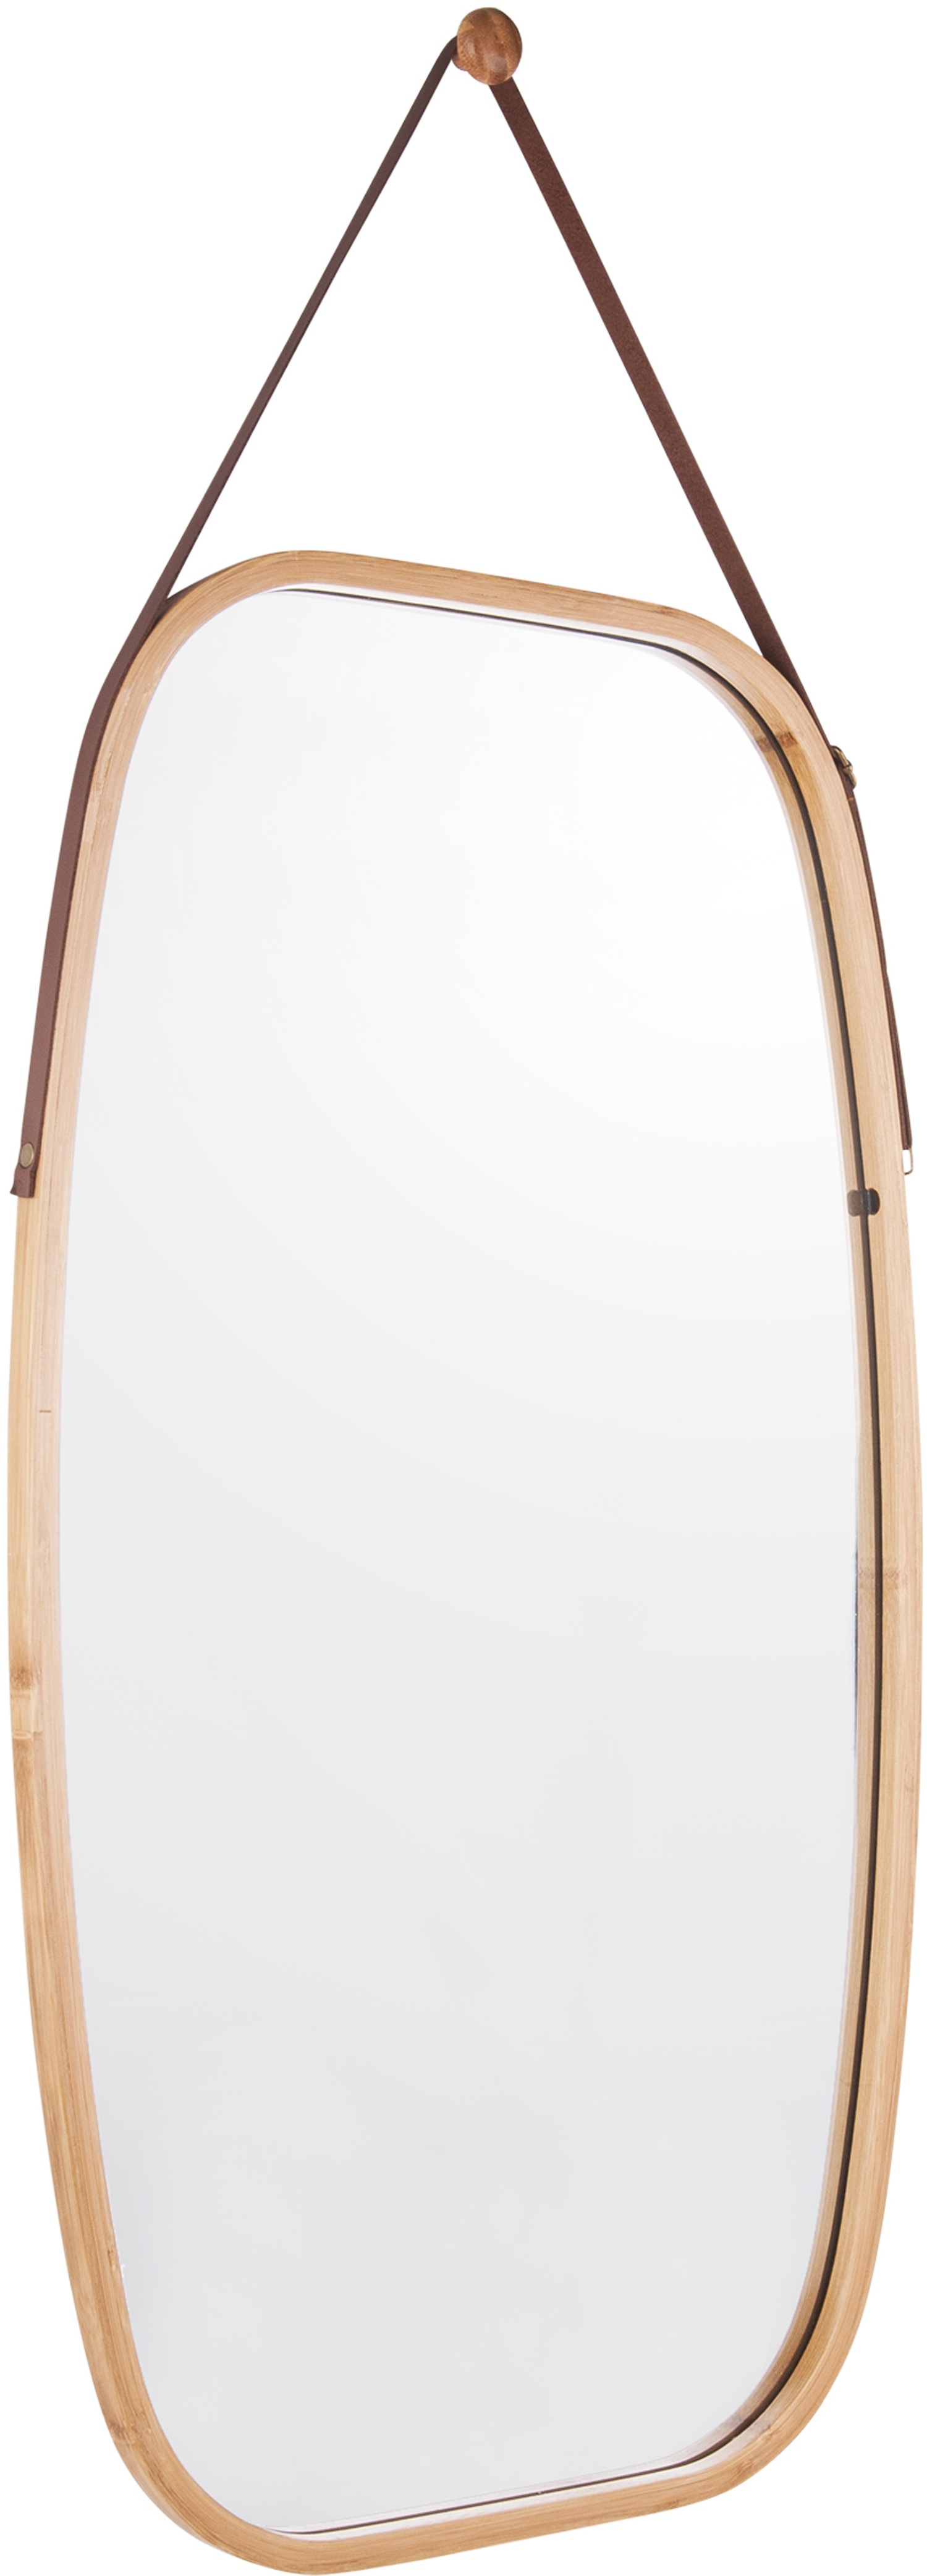 Grand miroir en bambou à suspendre Idyllic